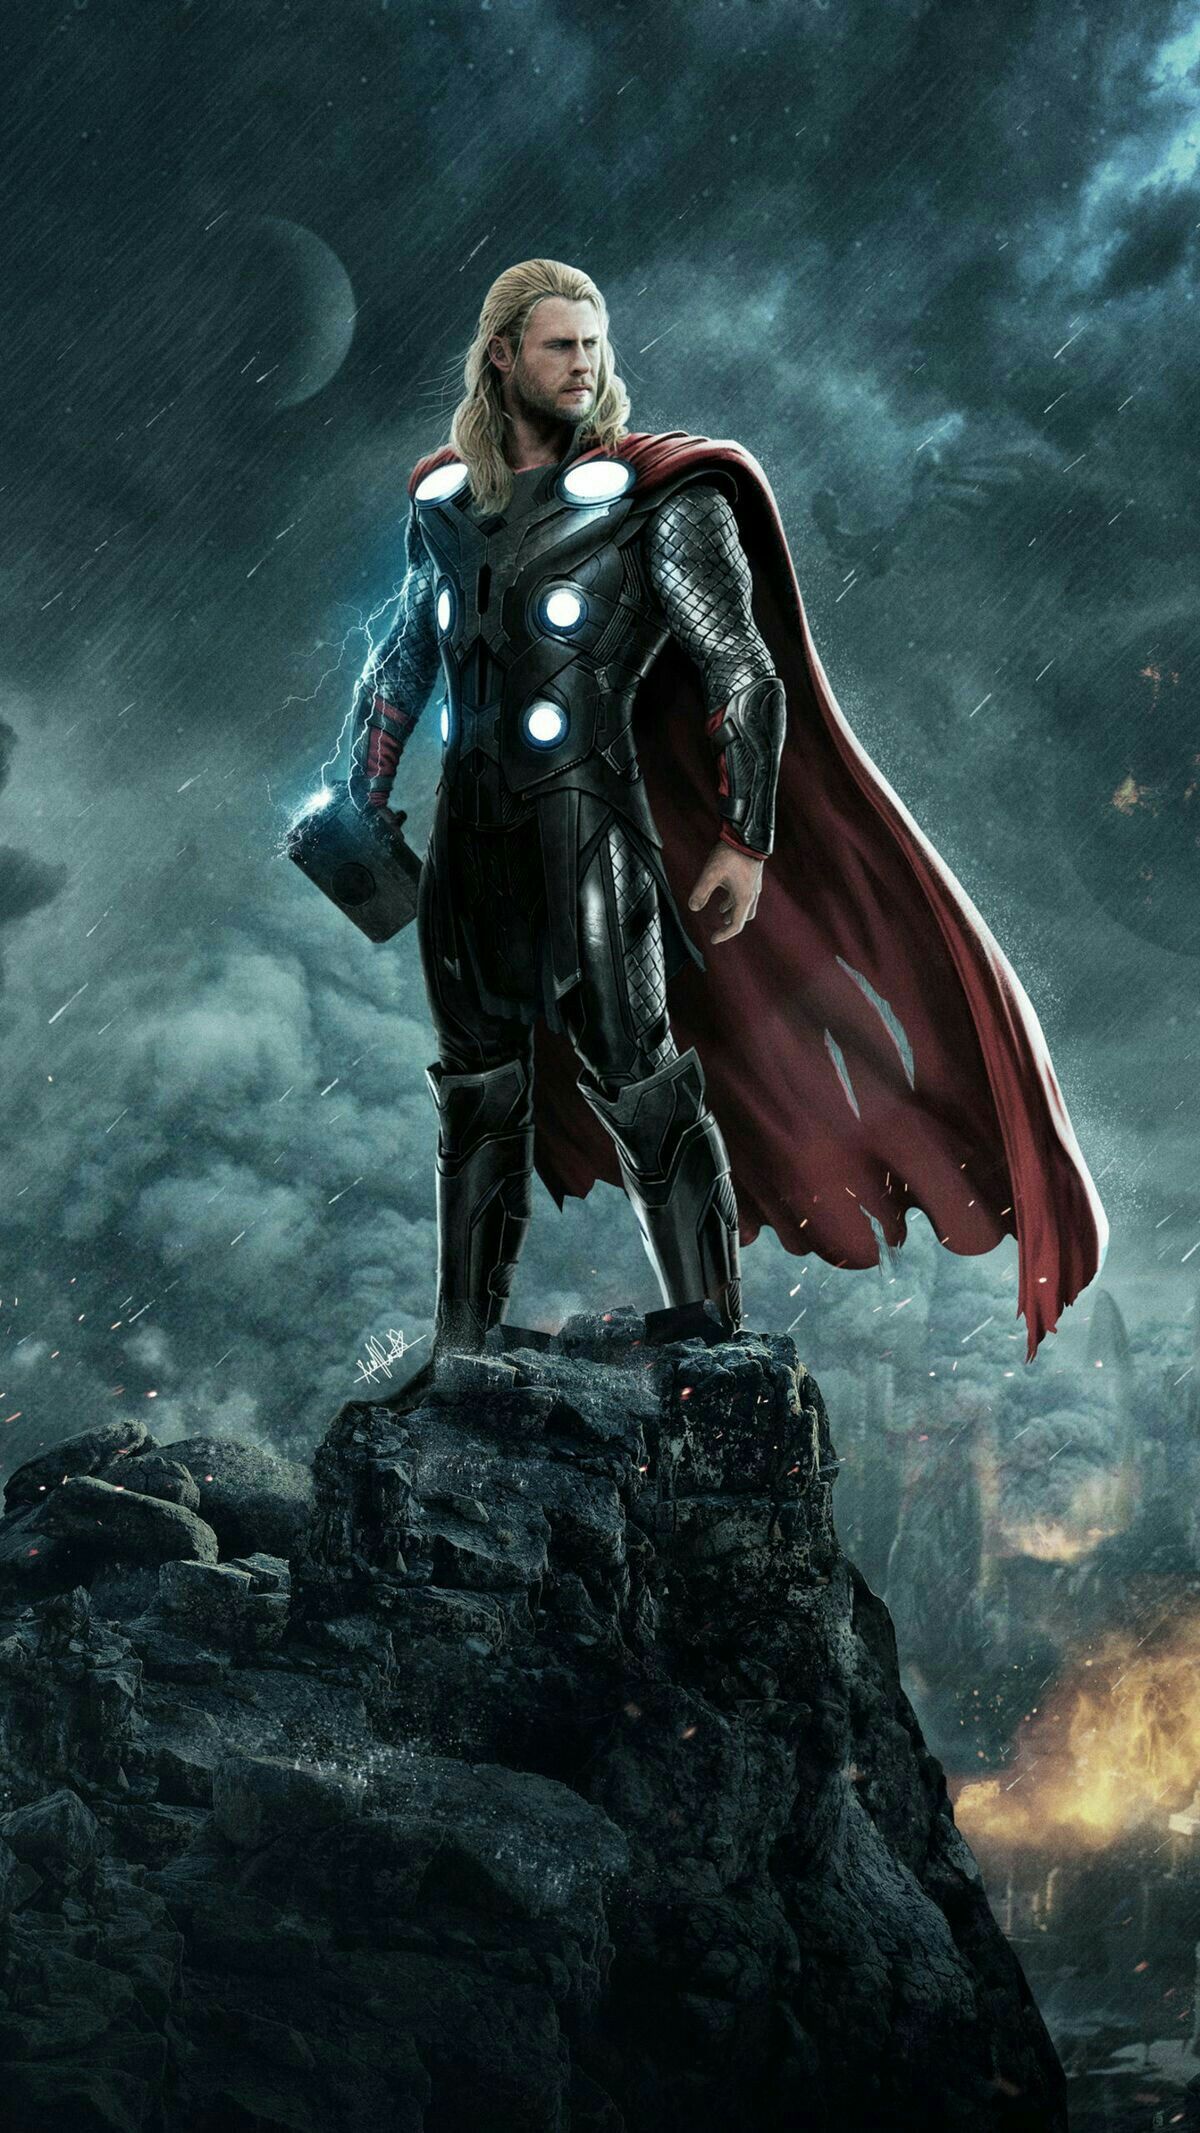 THOR WALLPAPER. Thor wallpaper, The dark world, Thor